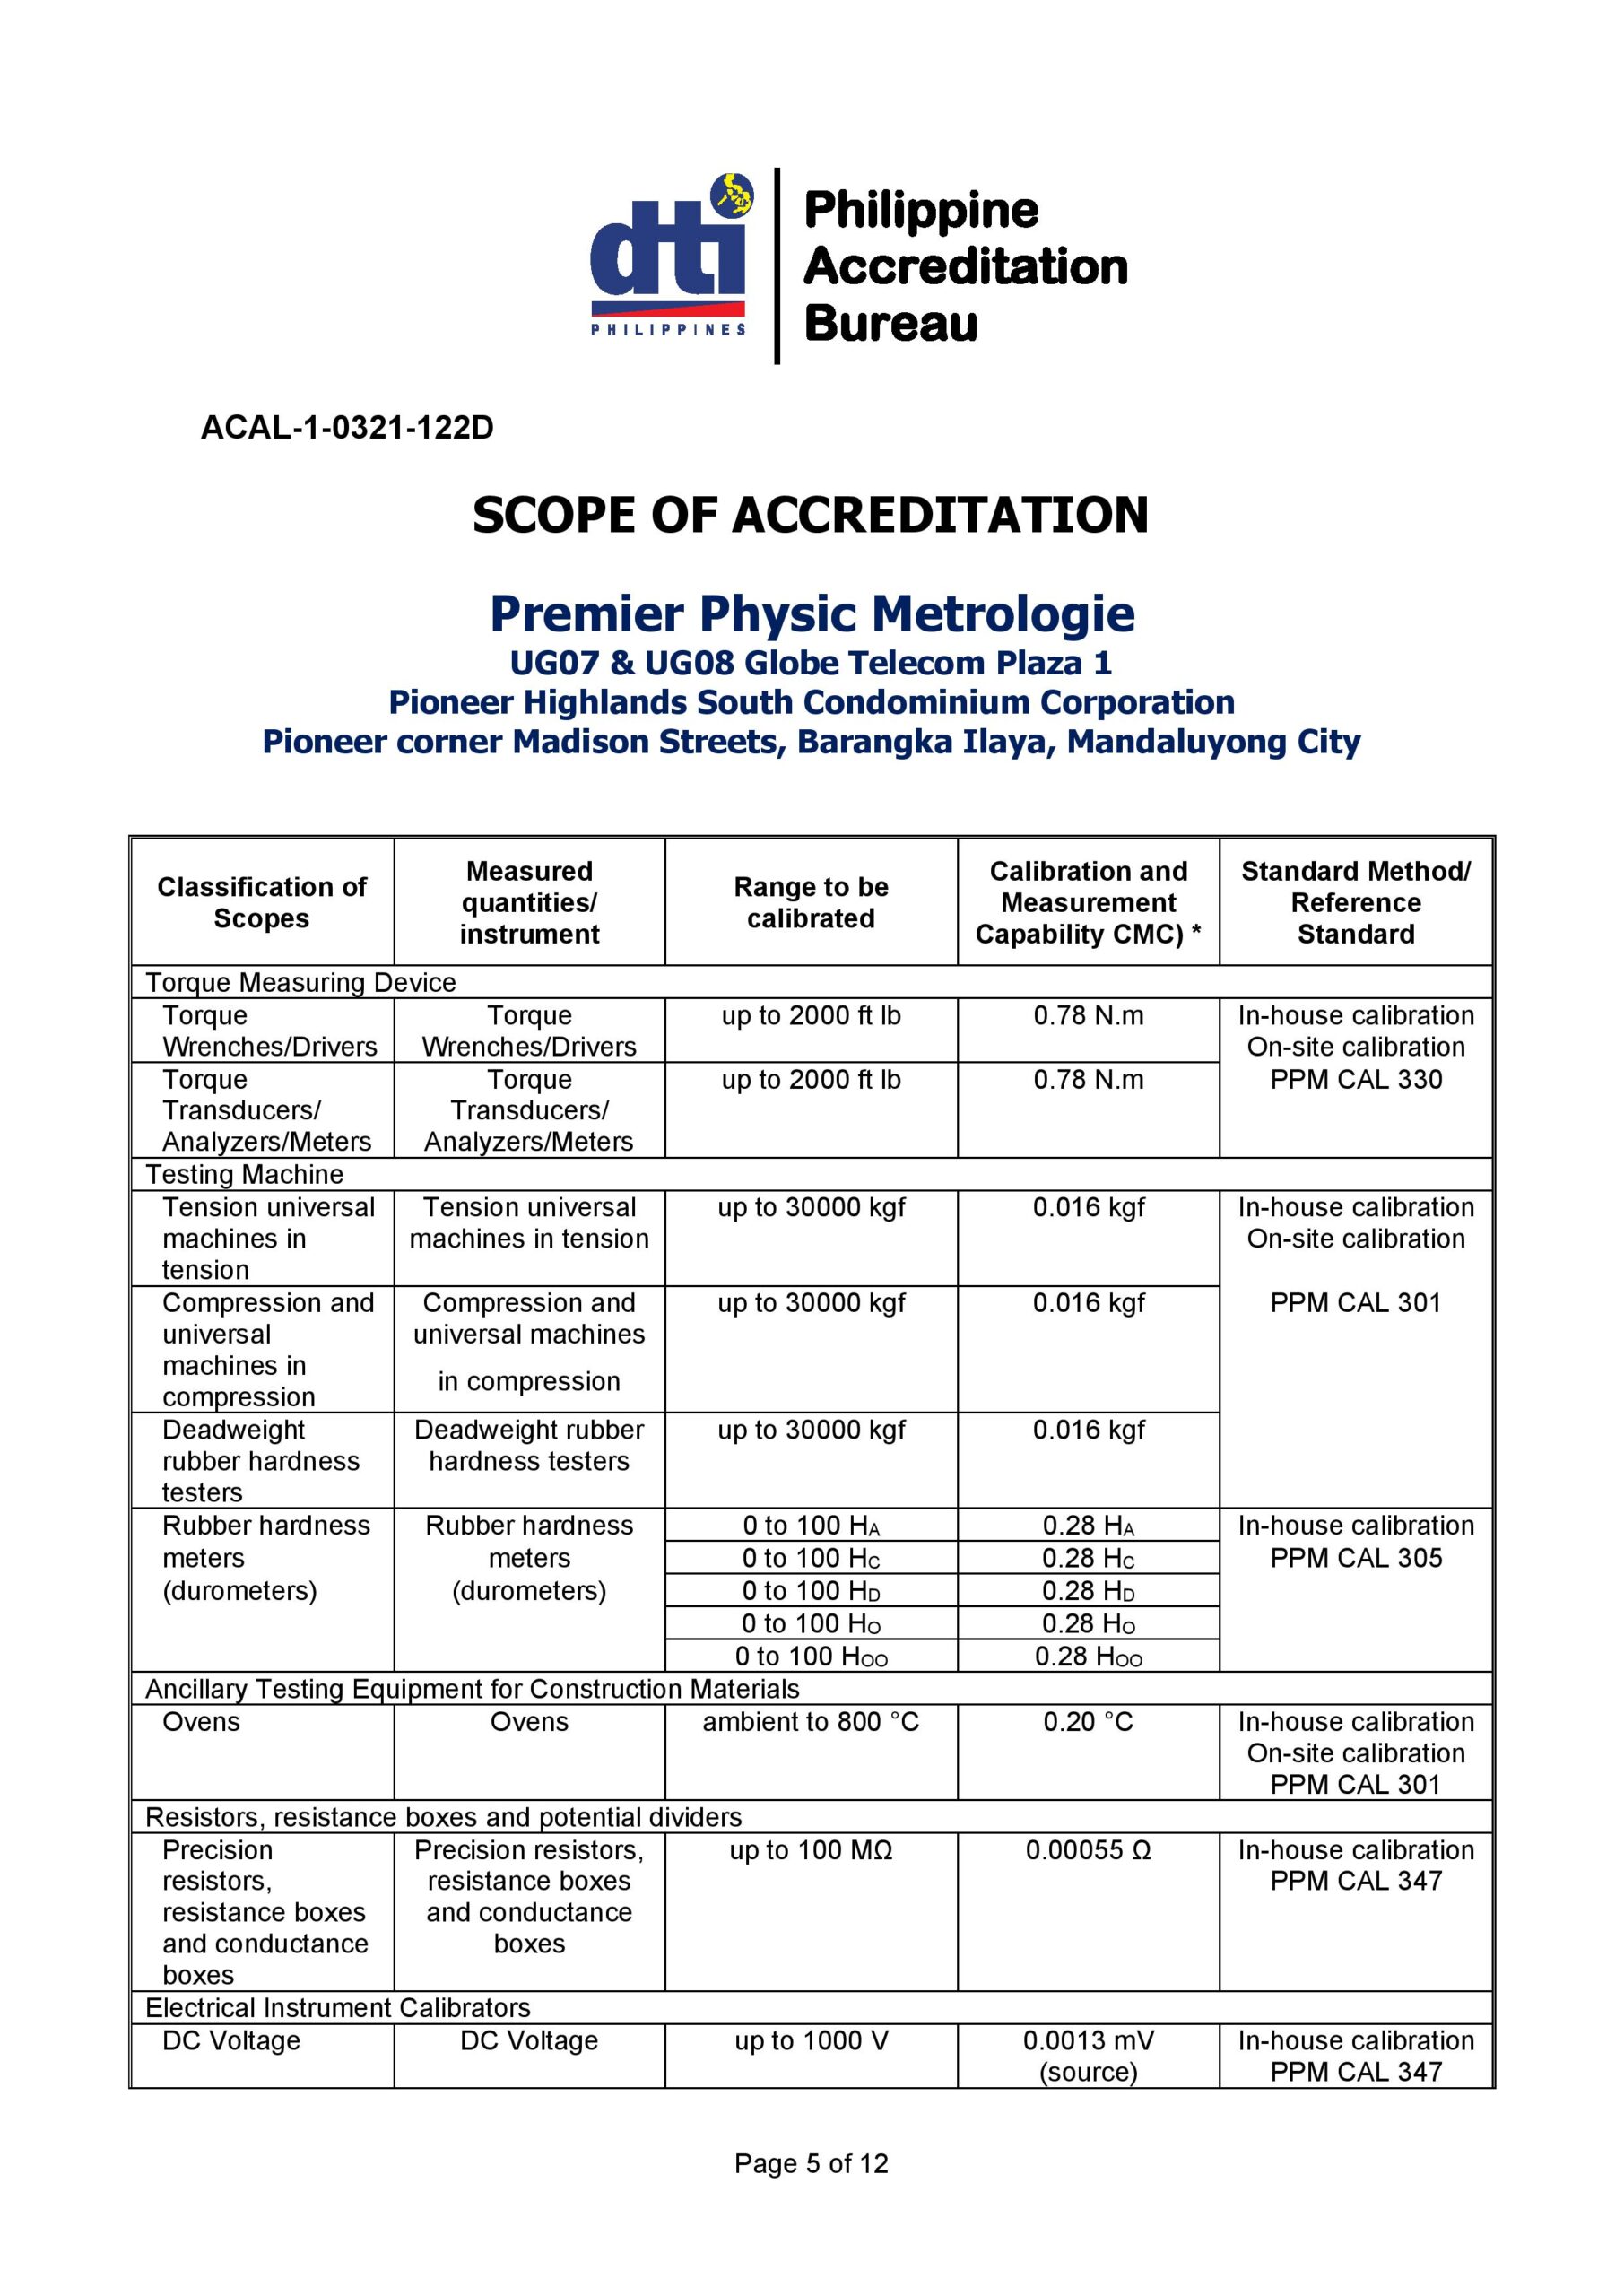 Premier Physic Metrologie - Scope of Accreditation 5